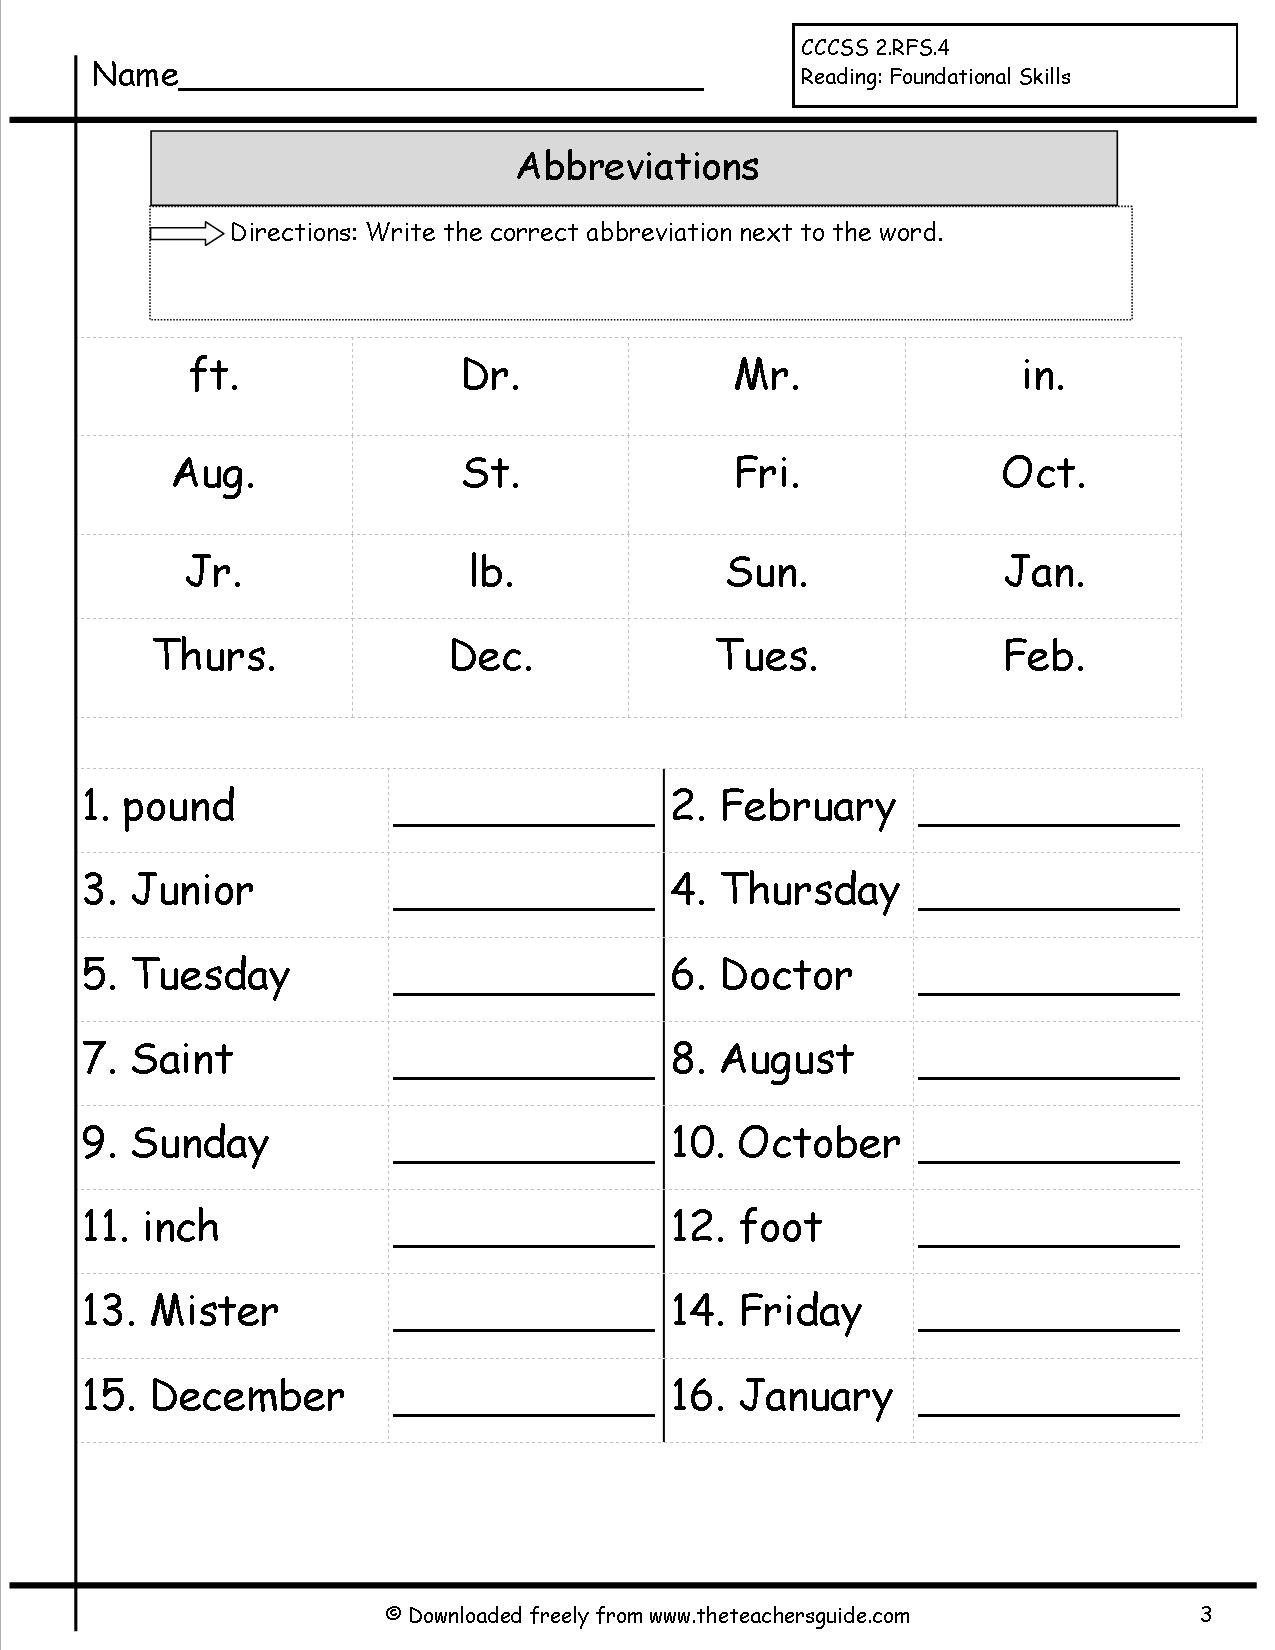 Medical Terminology Abbreviations Worksheet Abbreviation Worksheet for Nursing